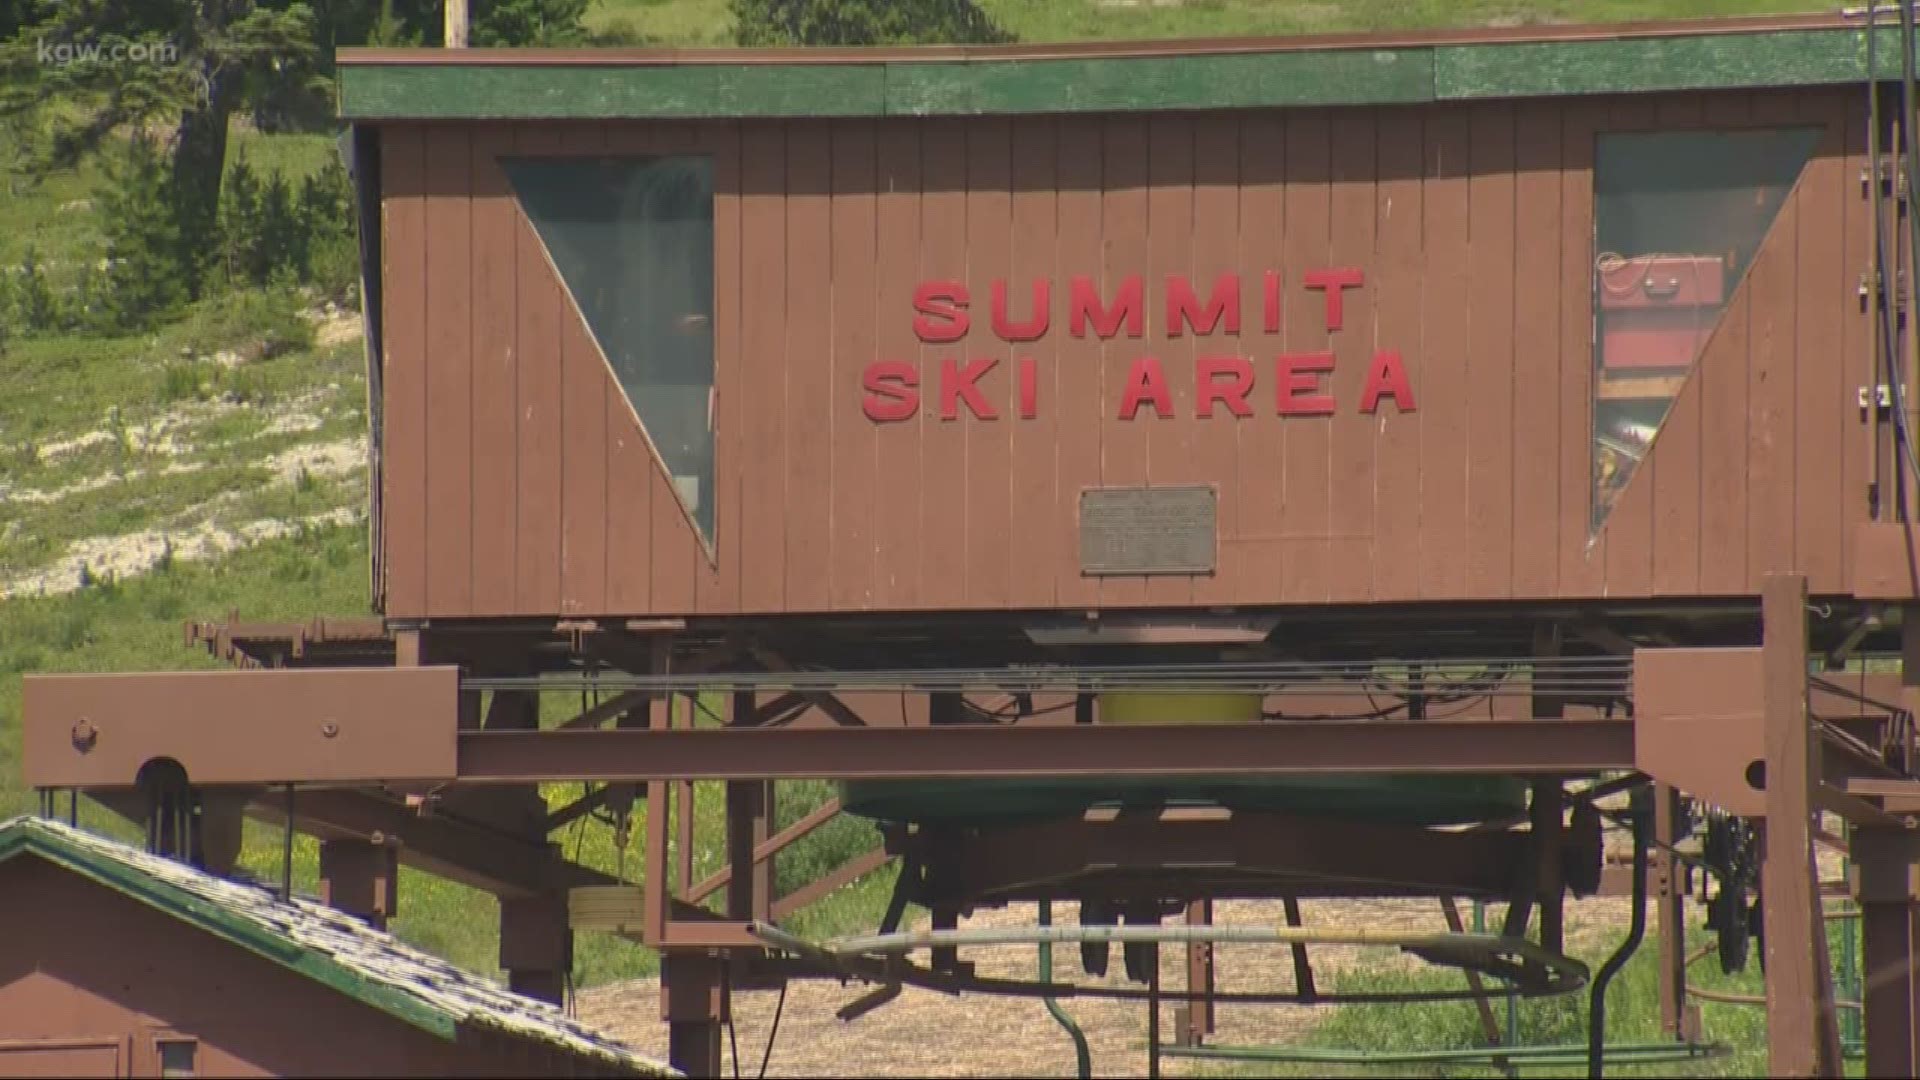 Timberline Lodge bought the Summit Ski Area.